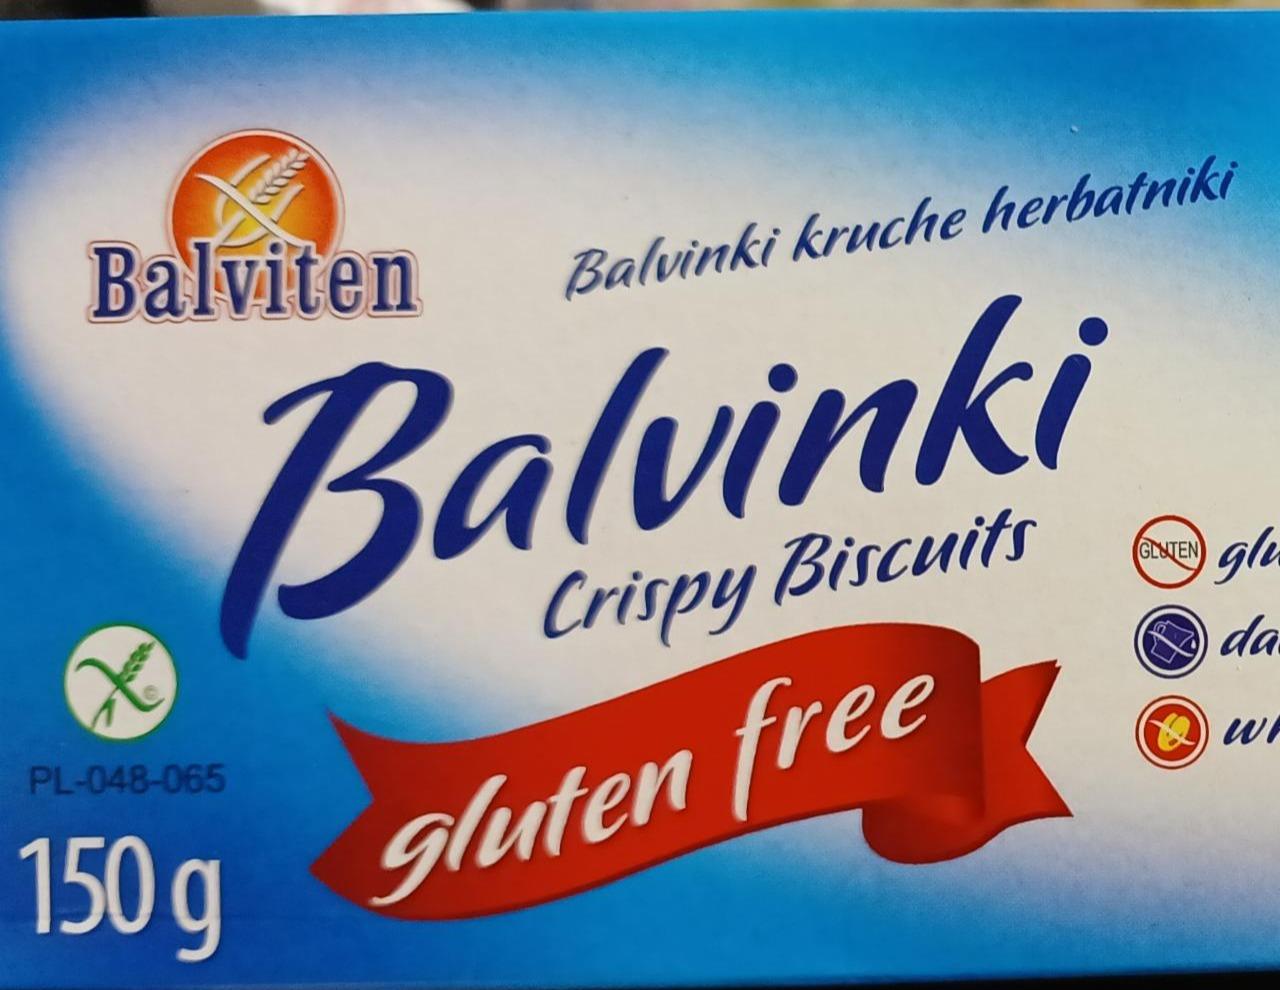 Fotografie - Balvinki Crispy Biscuits gluten free Balviten